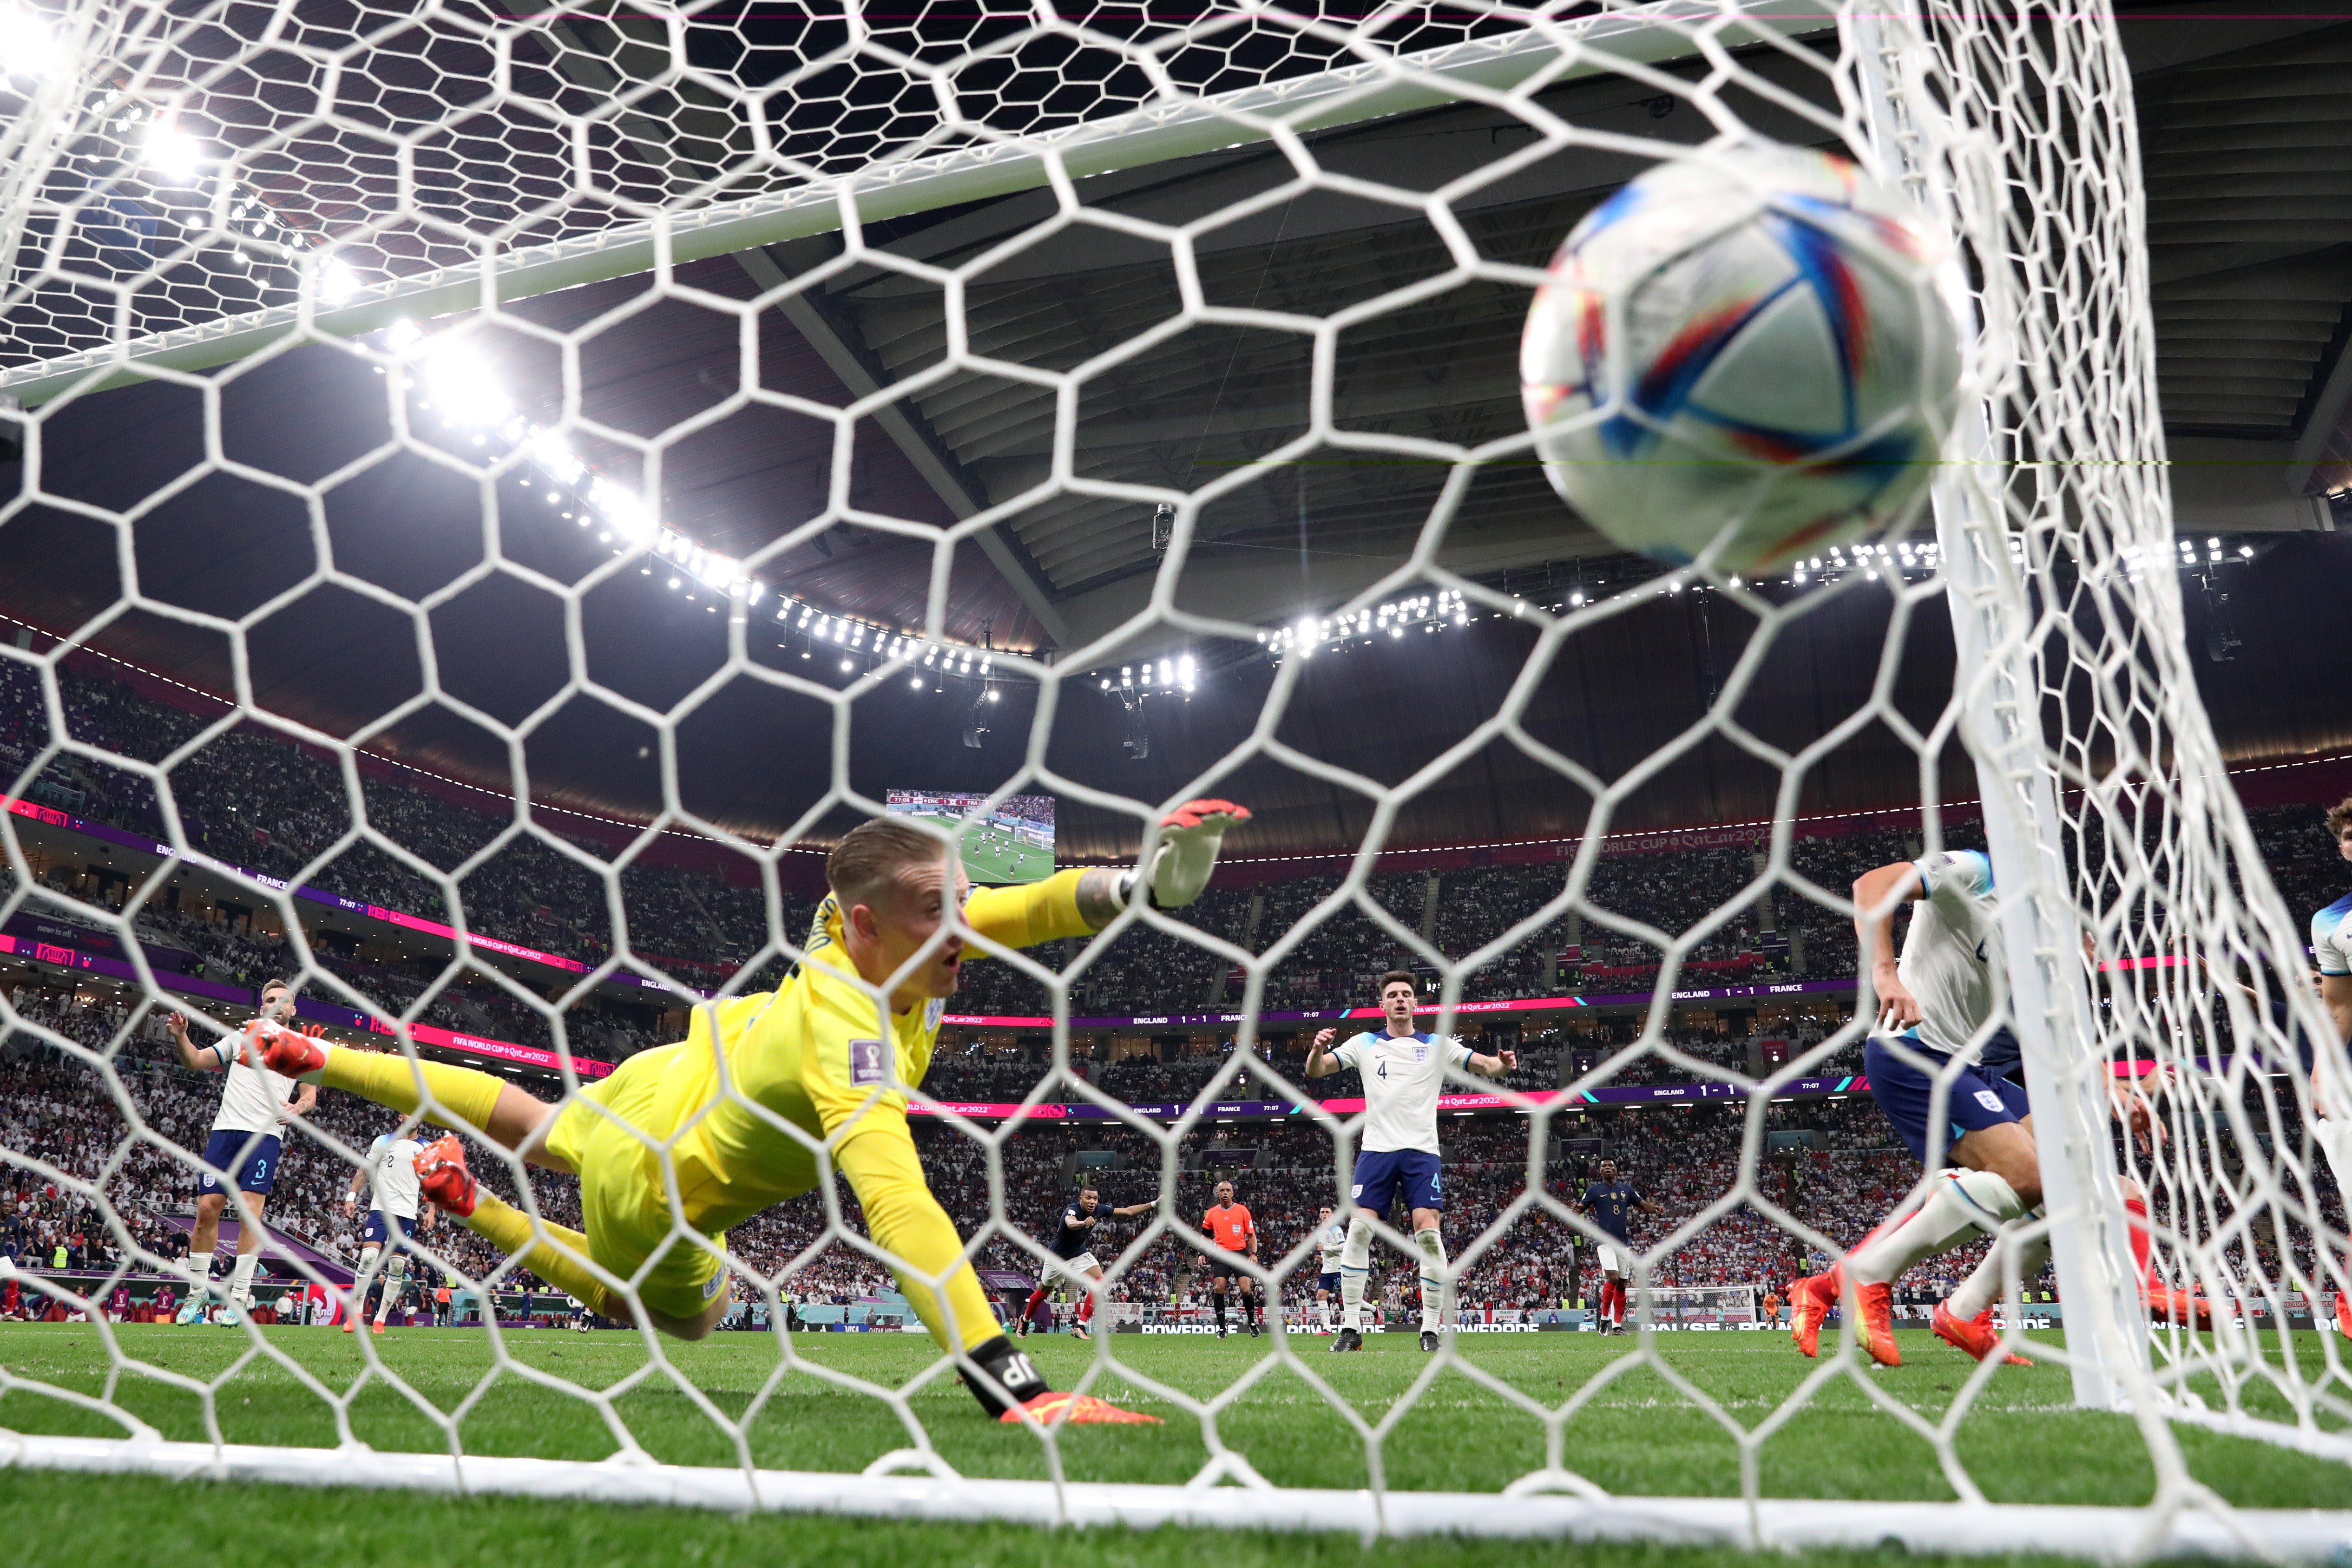 Jordan Pickford of England dives in vain as Olivier Giroud of France scores the team's second goal